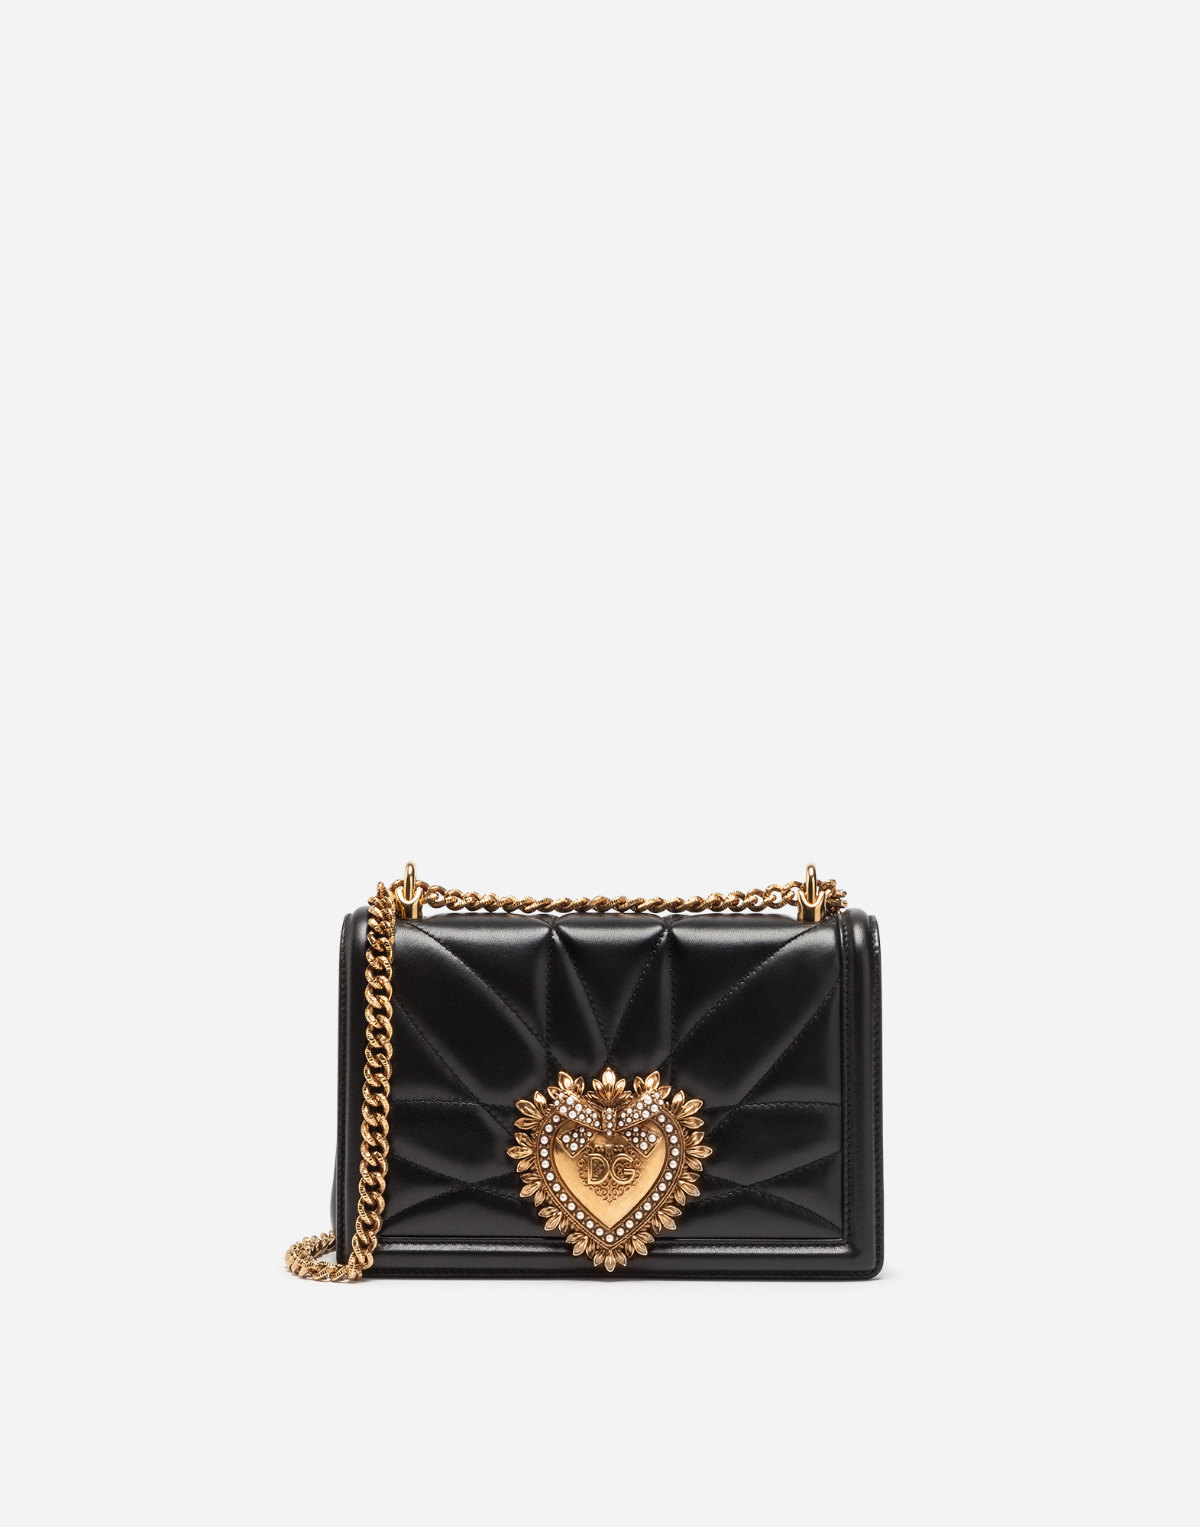 Dolce&Gabbana Presents Its New Devotion Bag